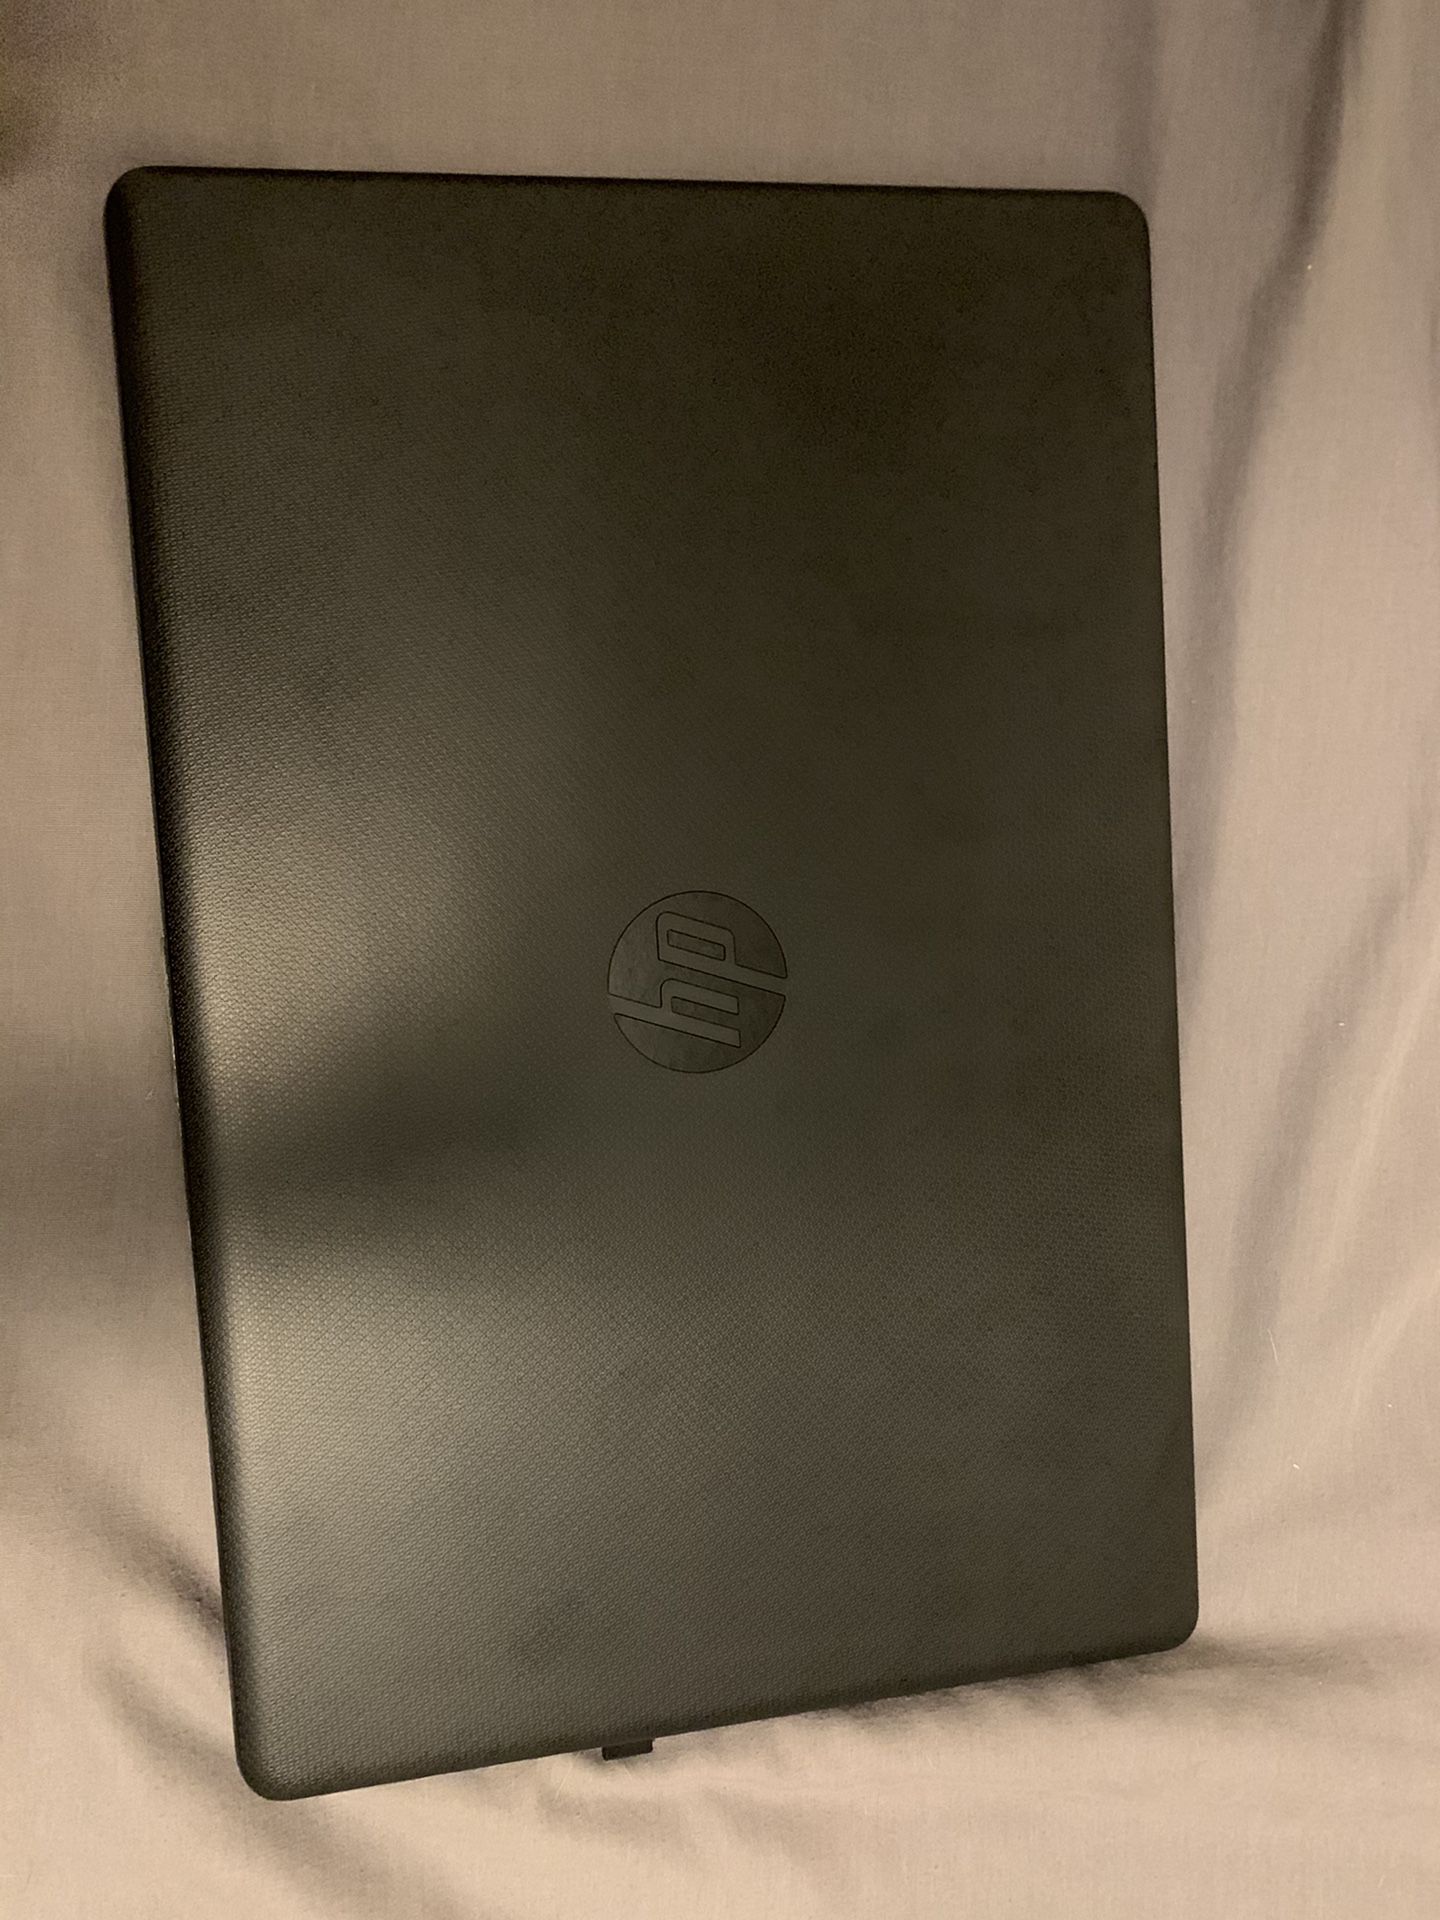 HP Notebook Laptop - 10th Gen i7 - 16 GB RAM - 256 GB SSD